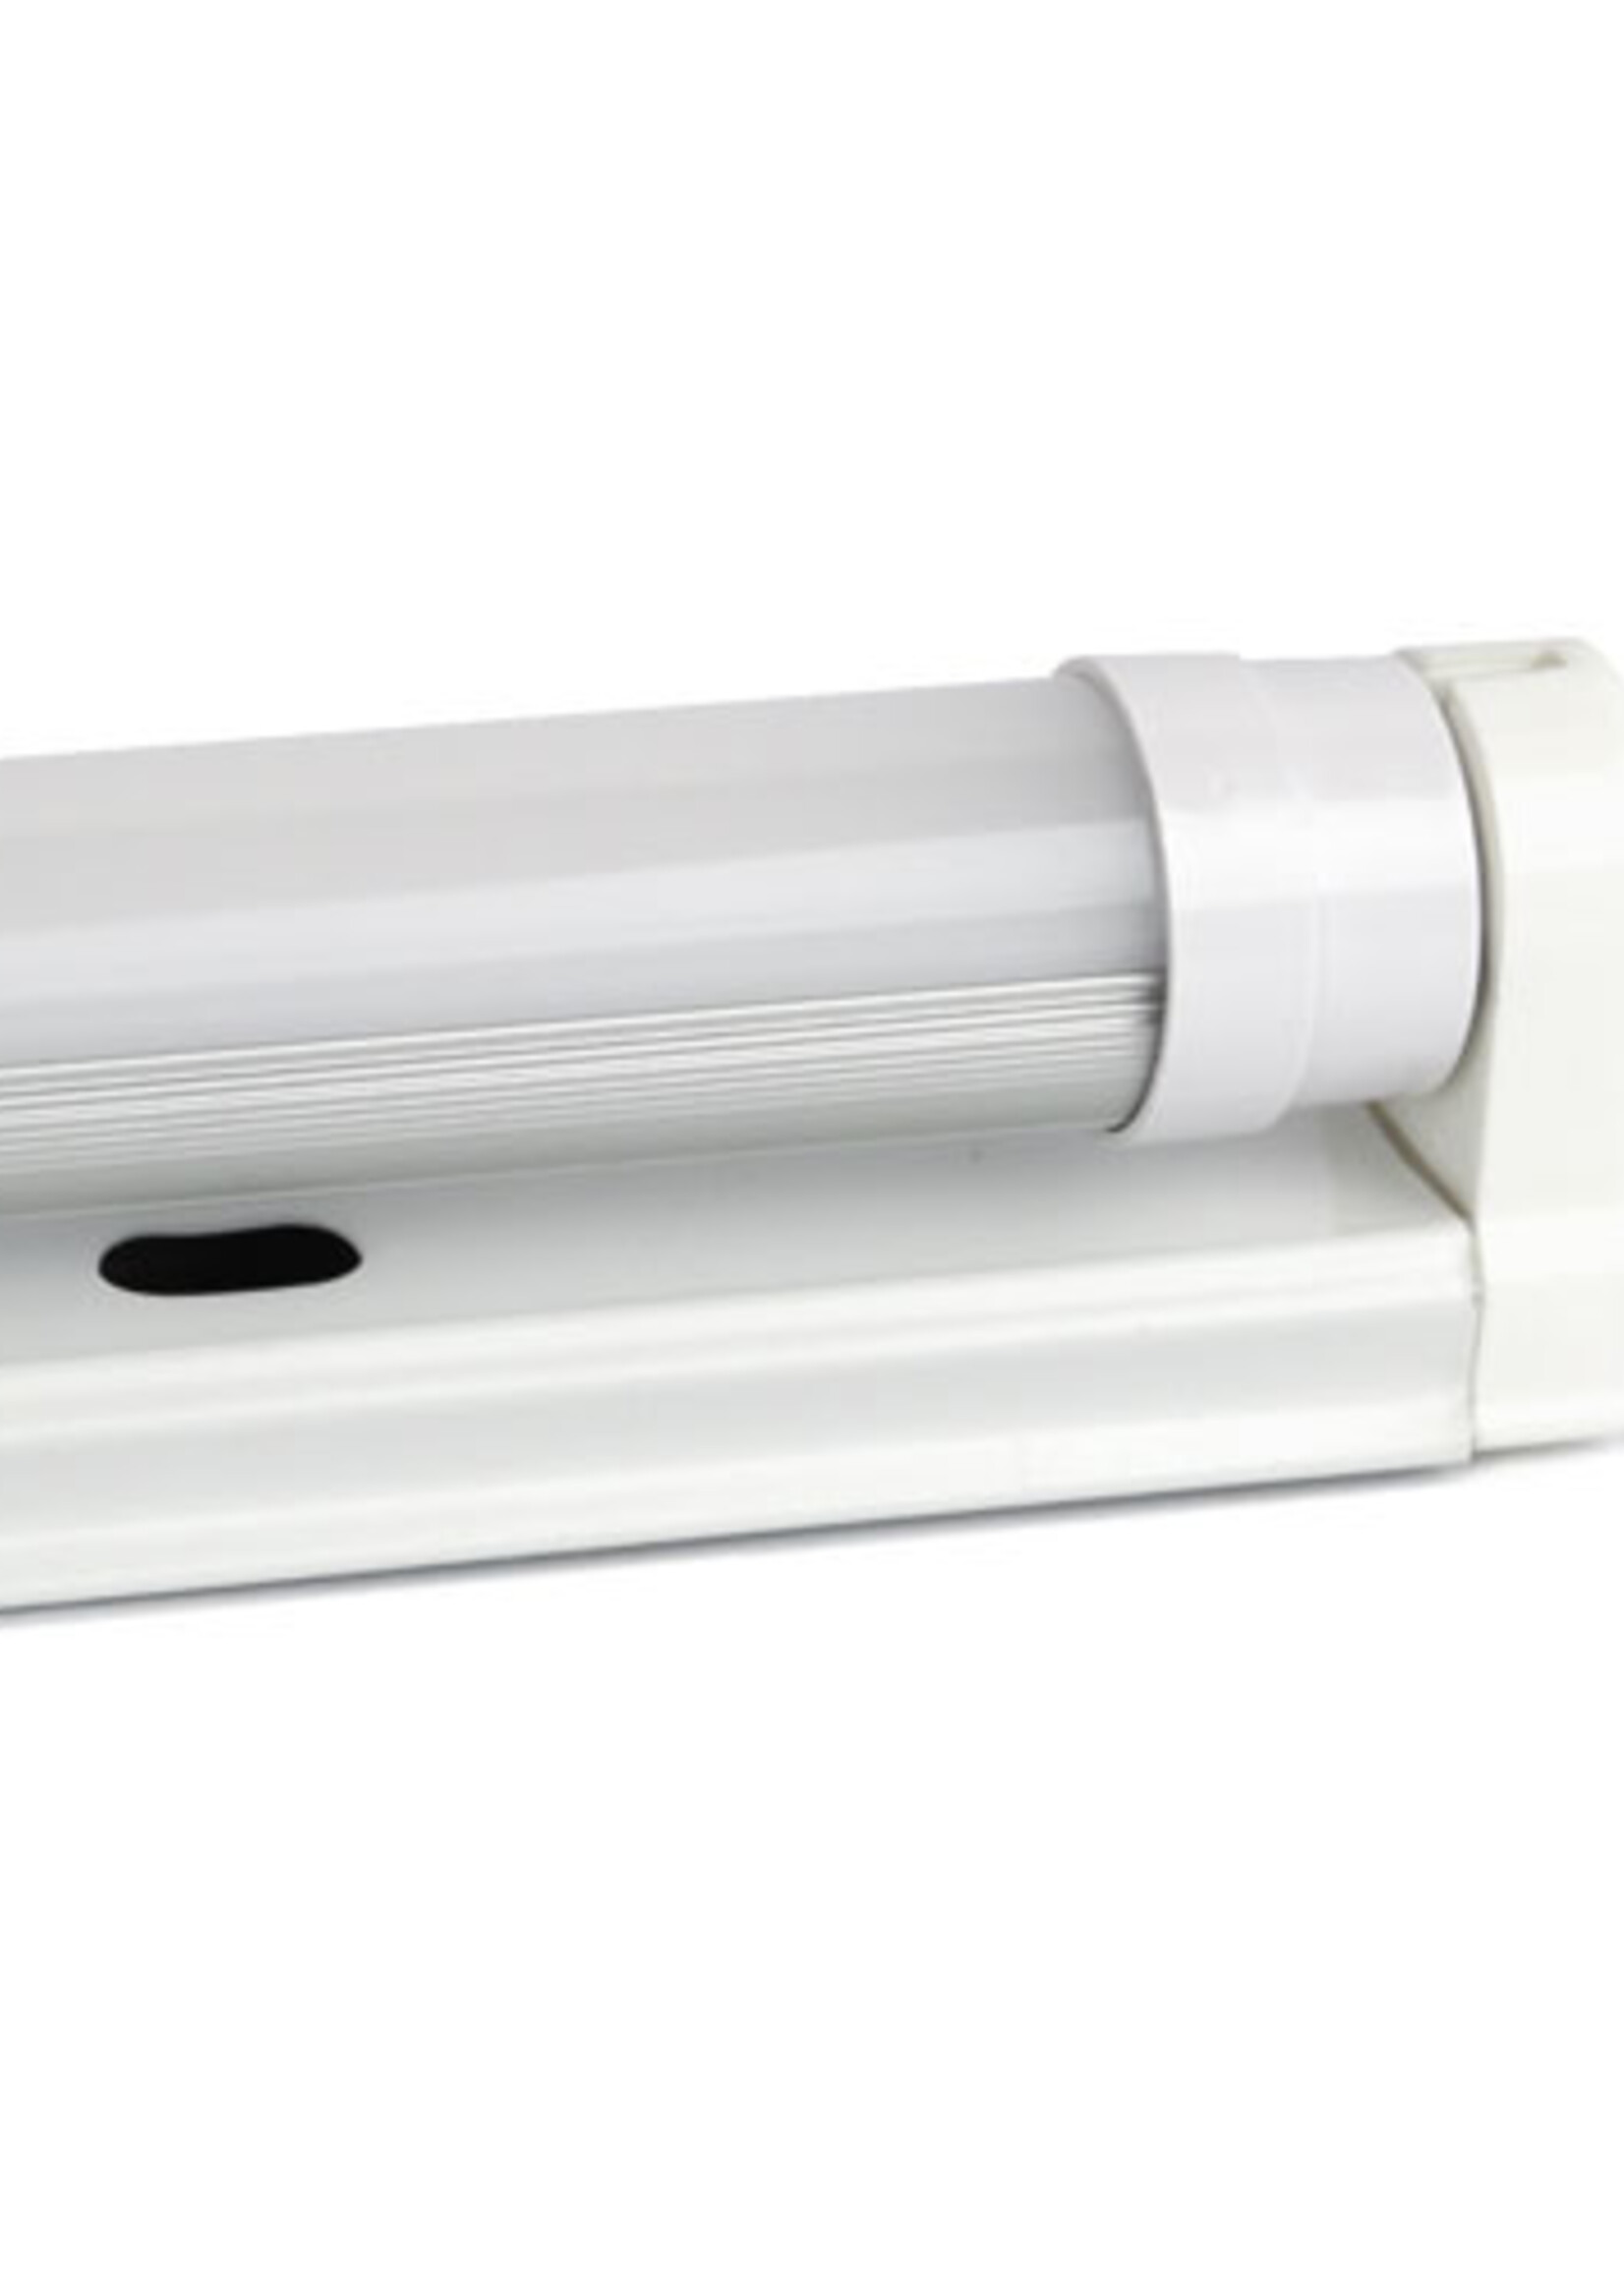 LEDWINKEL-Online LED Tube Light T8 120cm 18W 160lm/W - Ultra High lumen